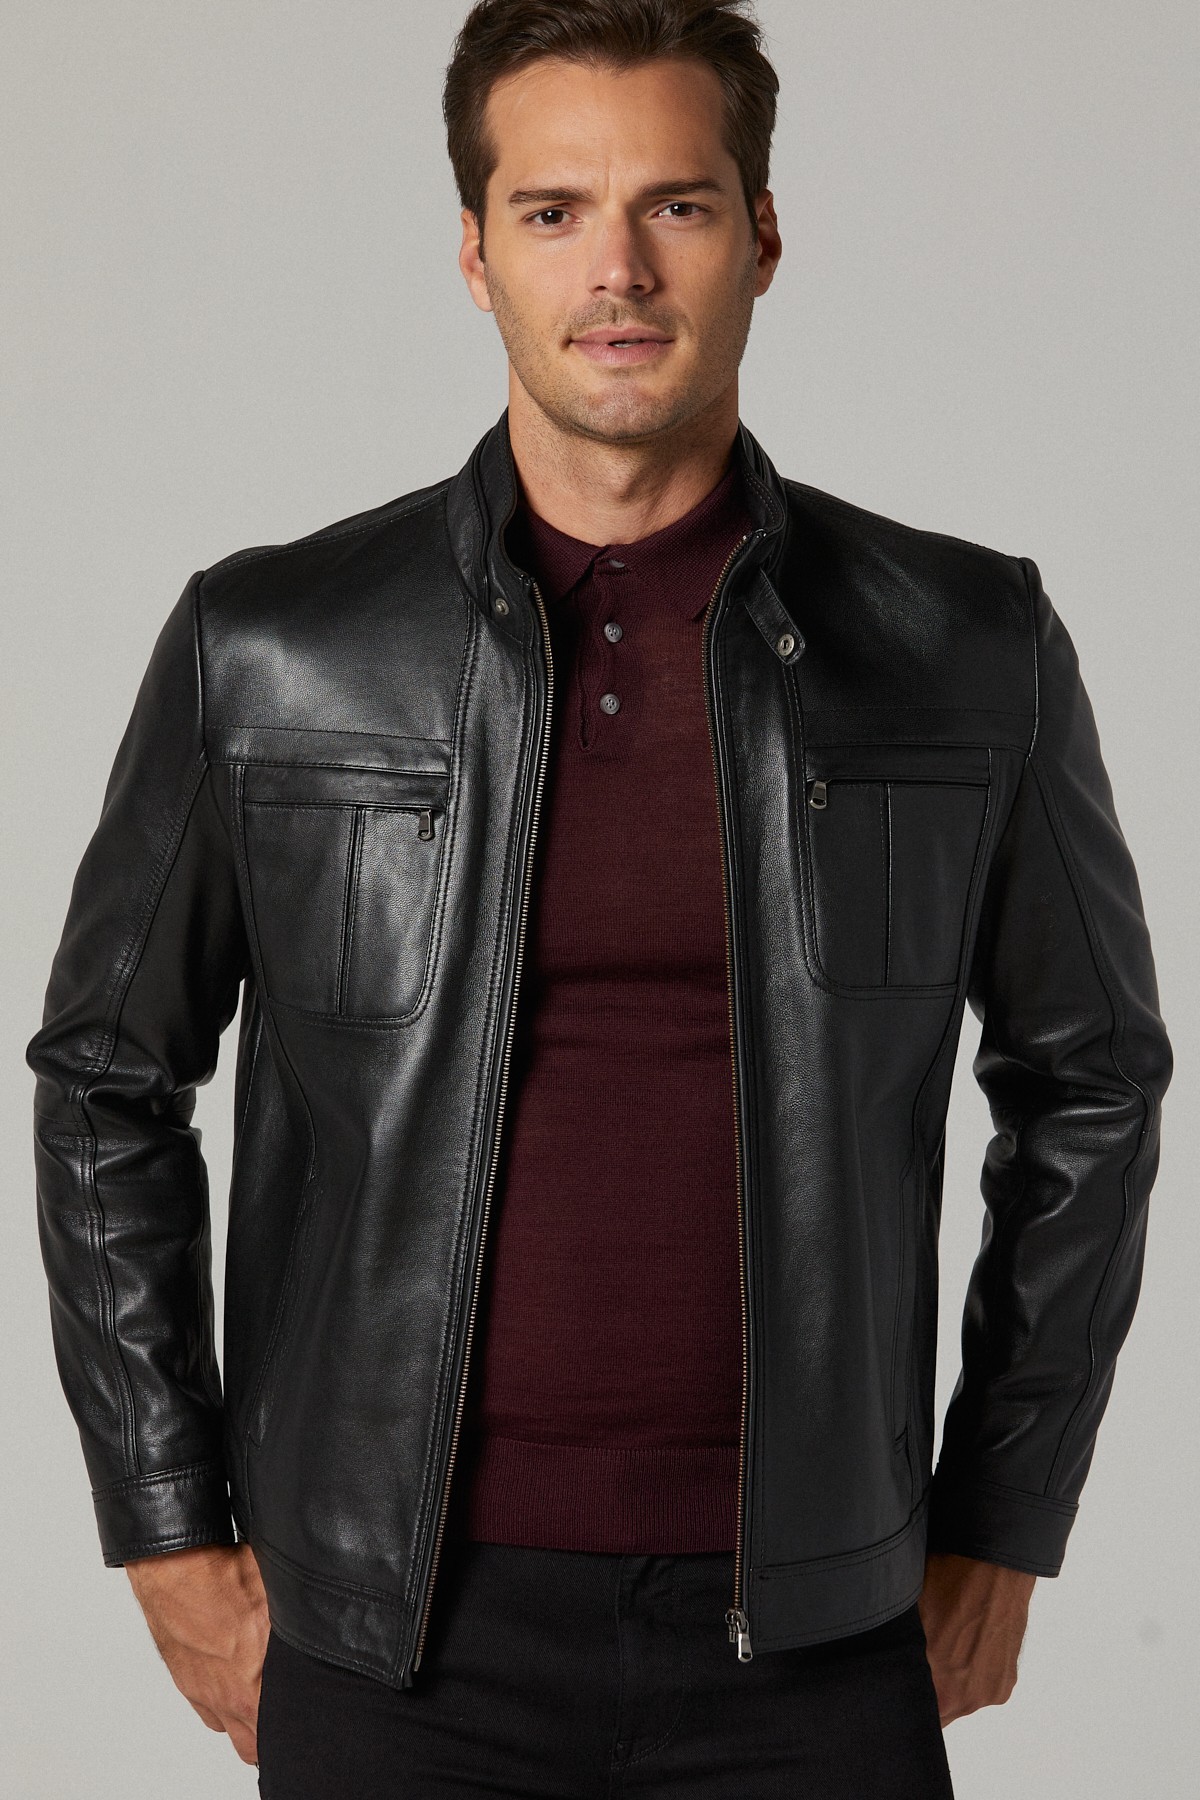 Black Men's Fashion Leather Jacket | Most Trendy Mens Jacket